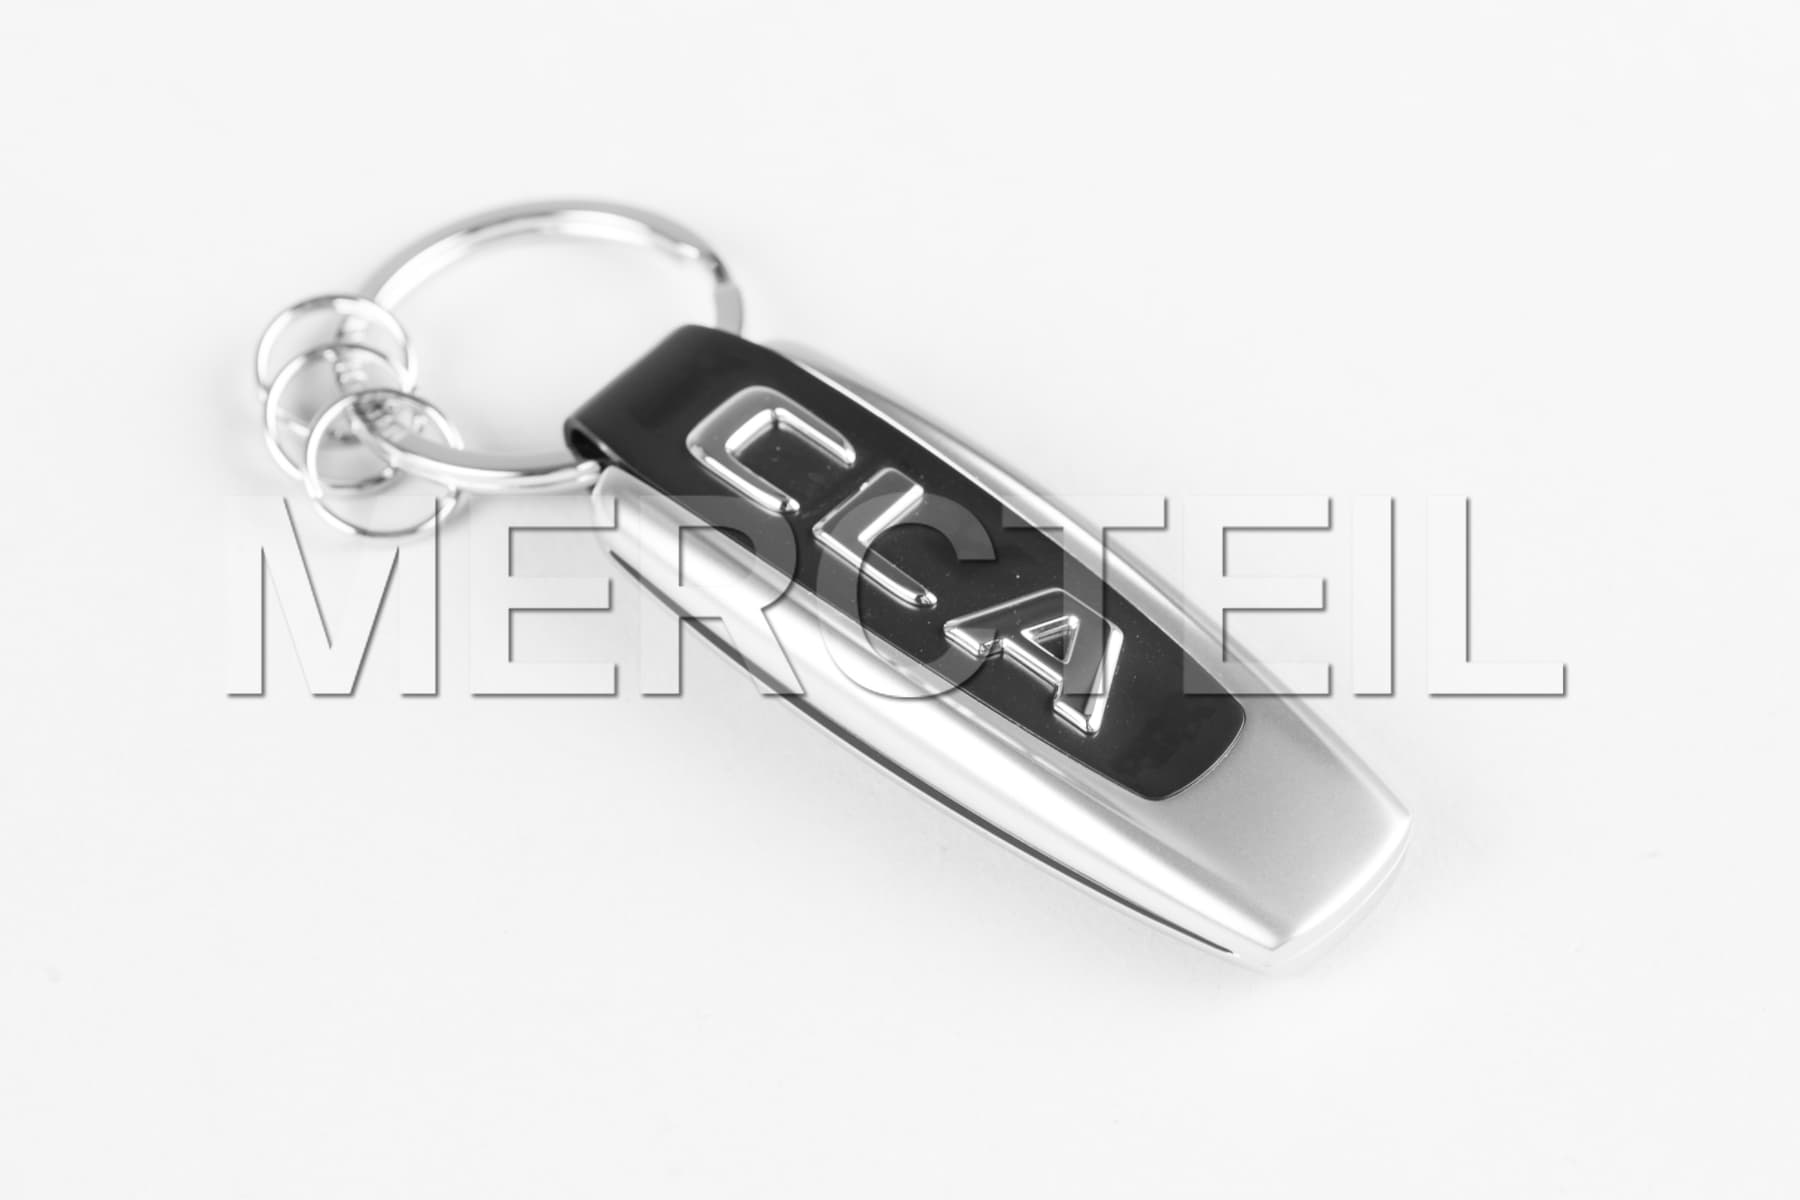 CLA Class Keyring Genuine Mercedes Benz Accessories